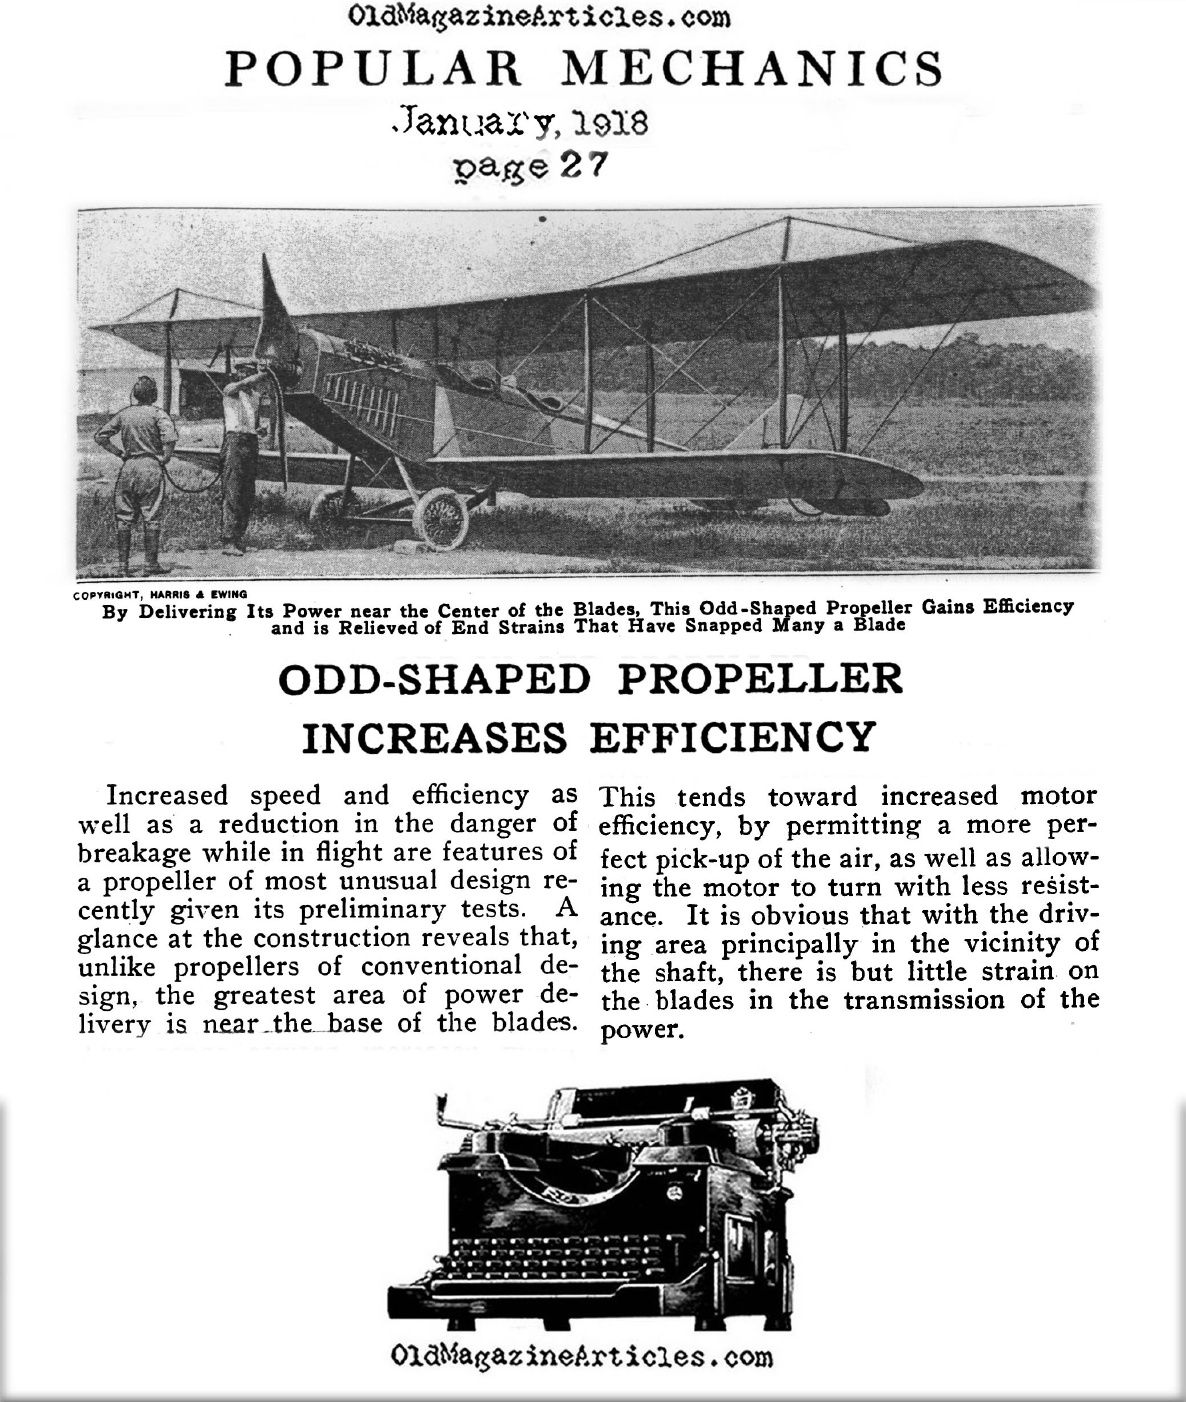 Odd-Shaped Propeller More Efficient  (Popular Mechanics, 1918)